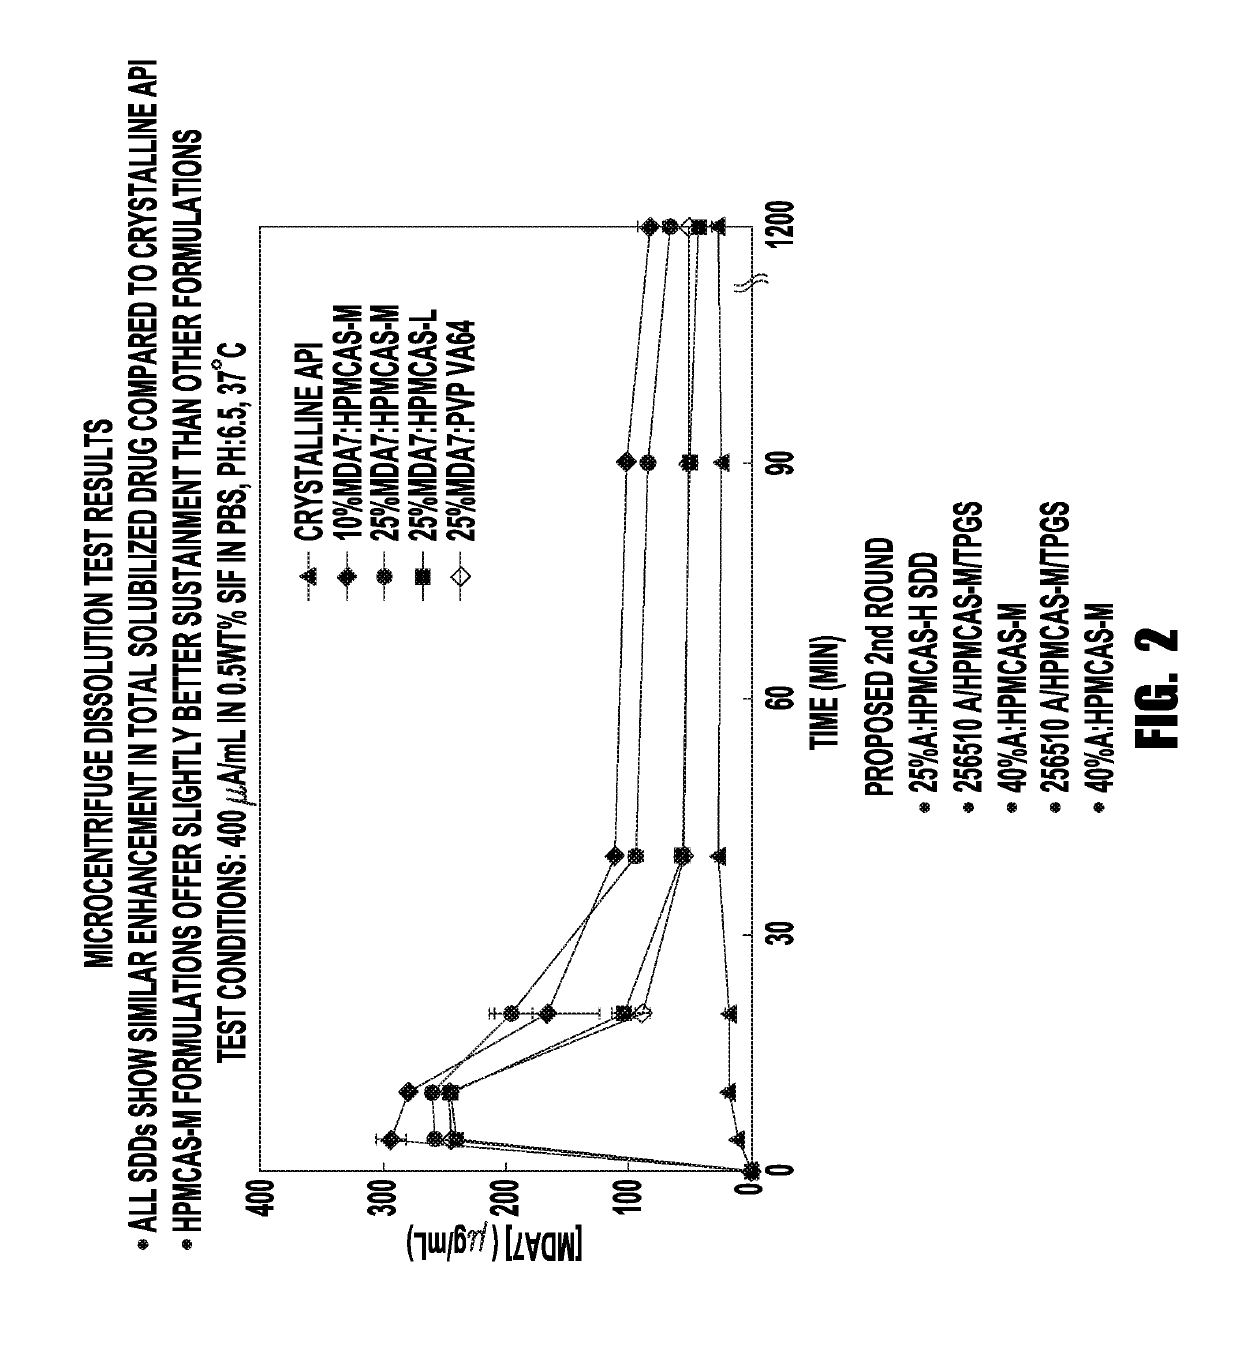 Oral cannabinoid receptor modulator formulations